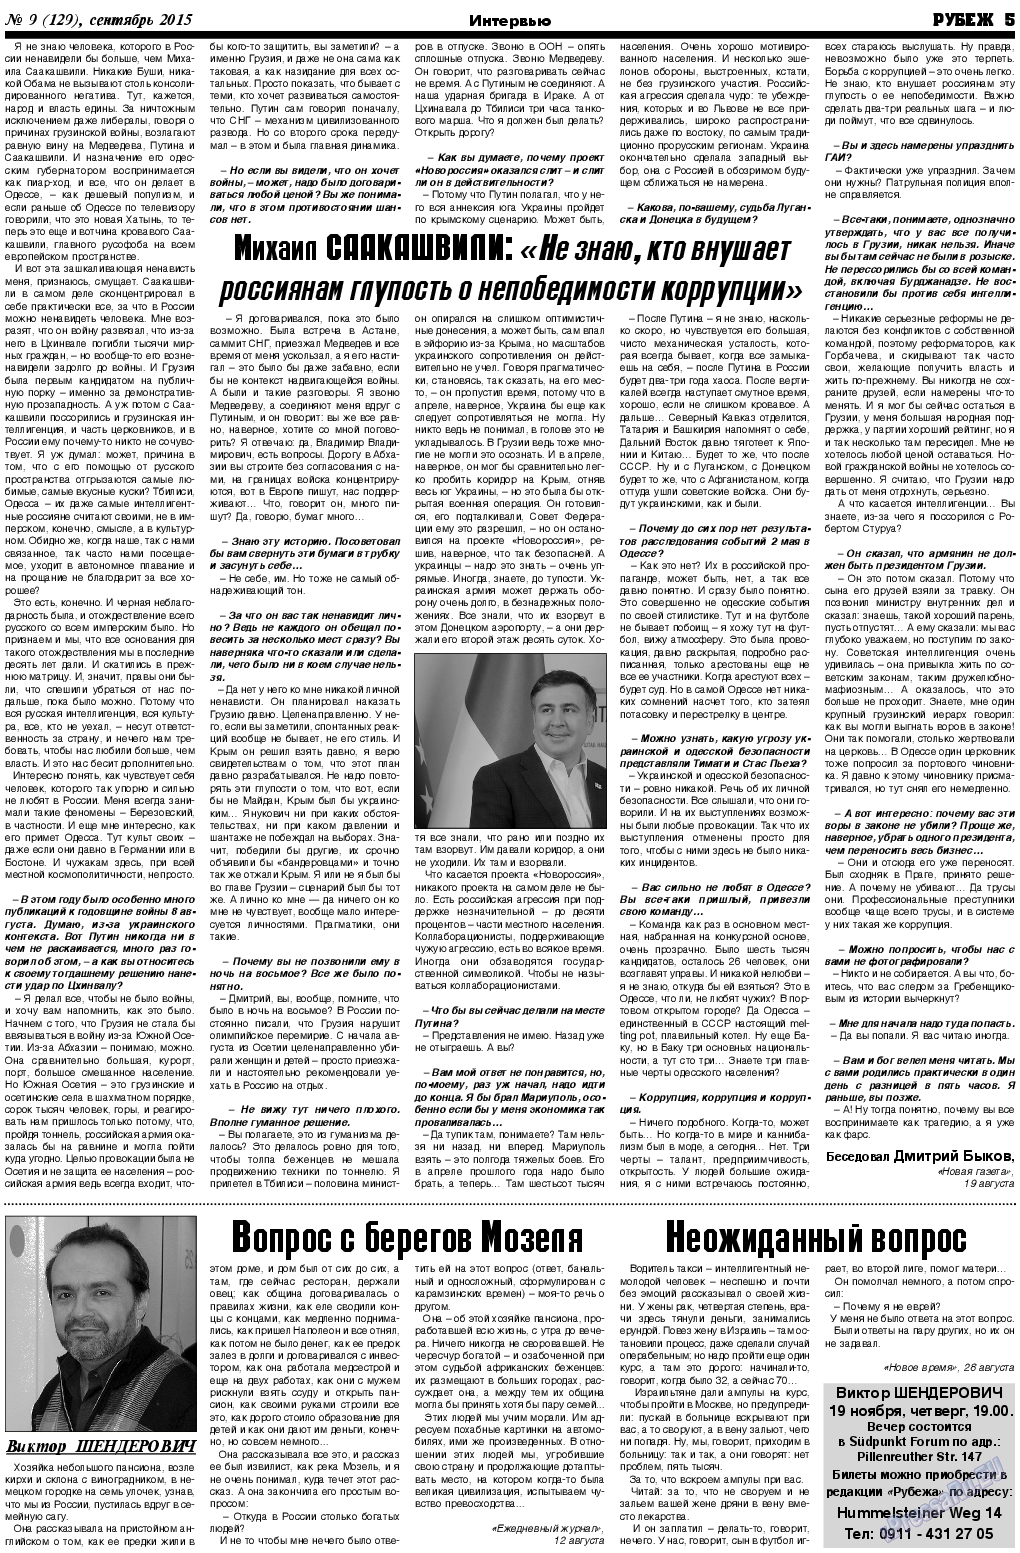 Рубеж, газета. 2015 №9 стр.5